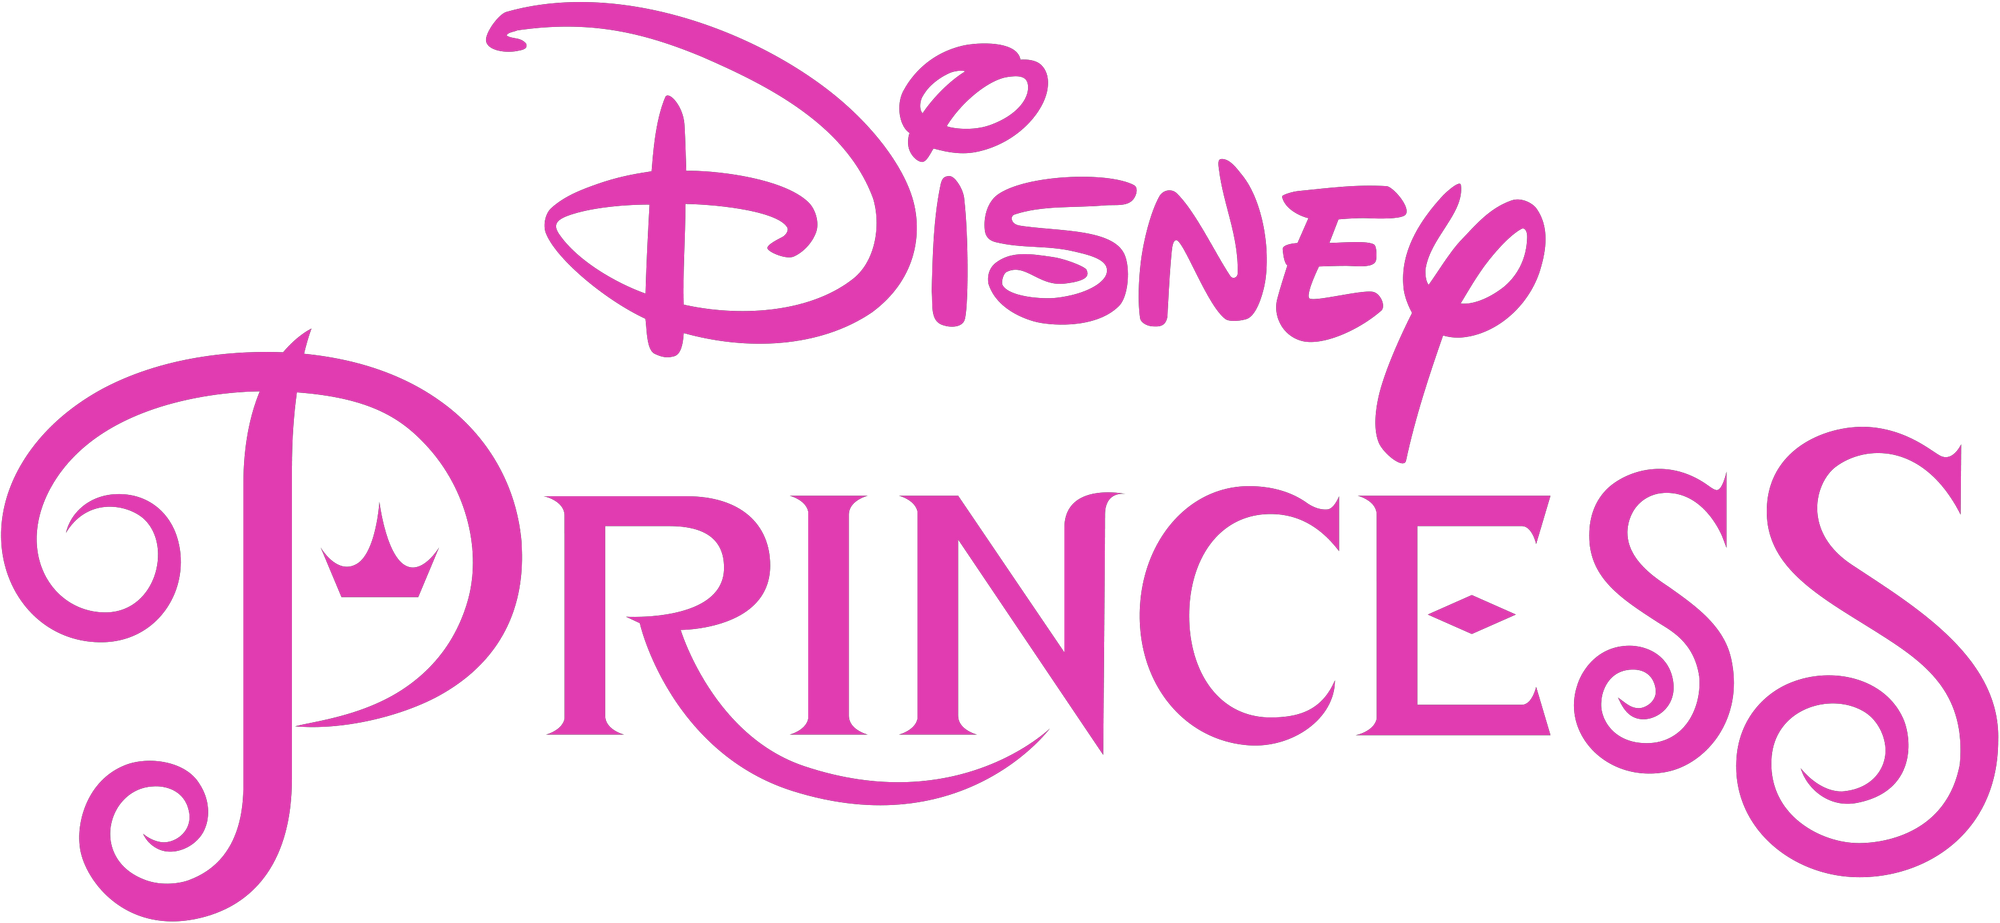 Download Image - DisneyPrincess 2015.png | Logopedia | FANDOM ...